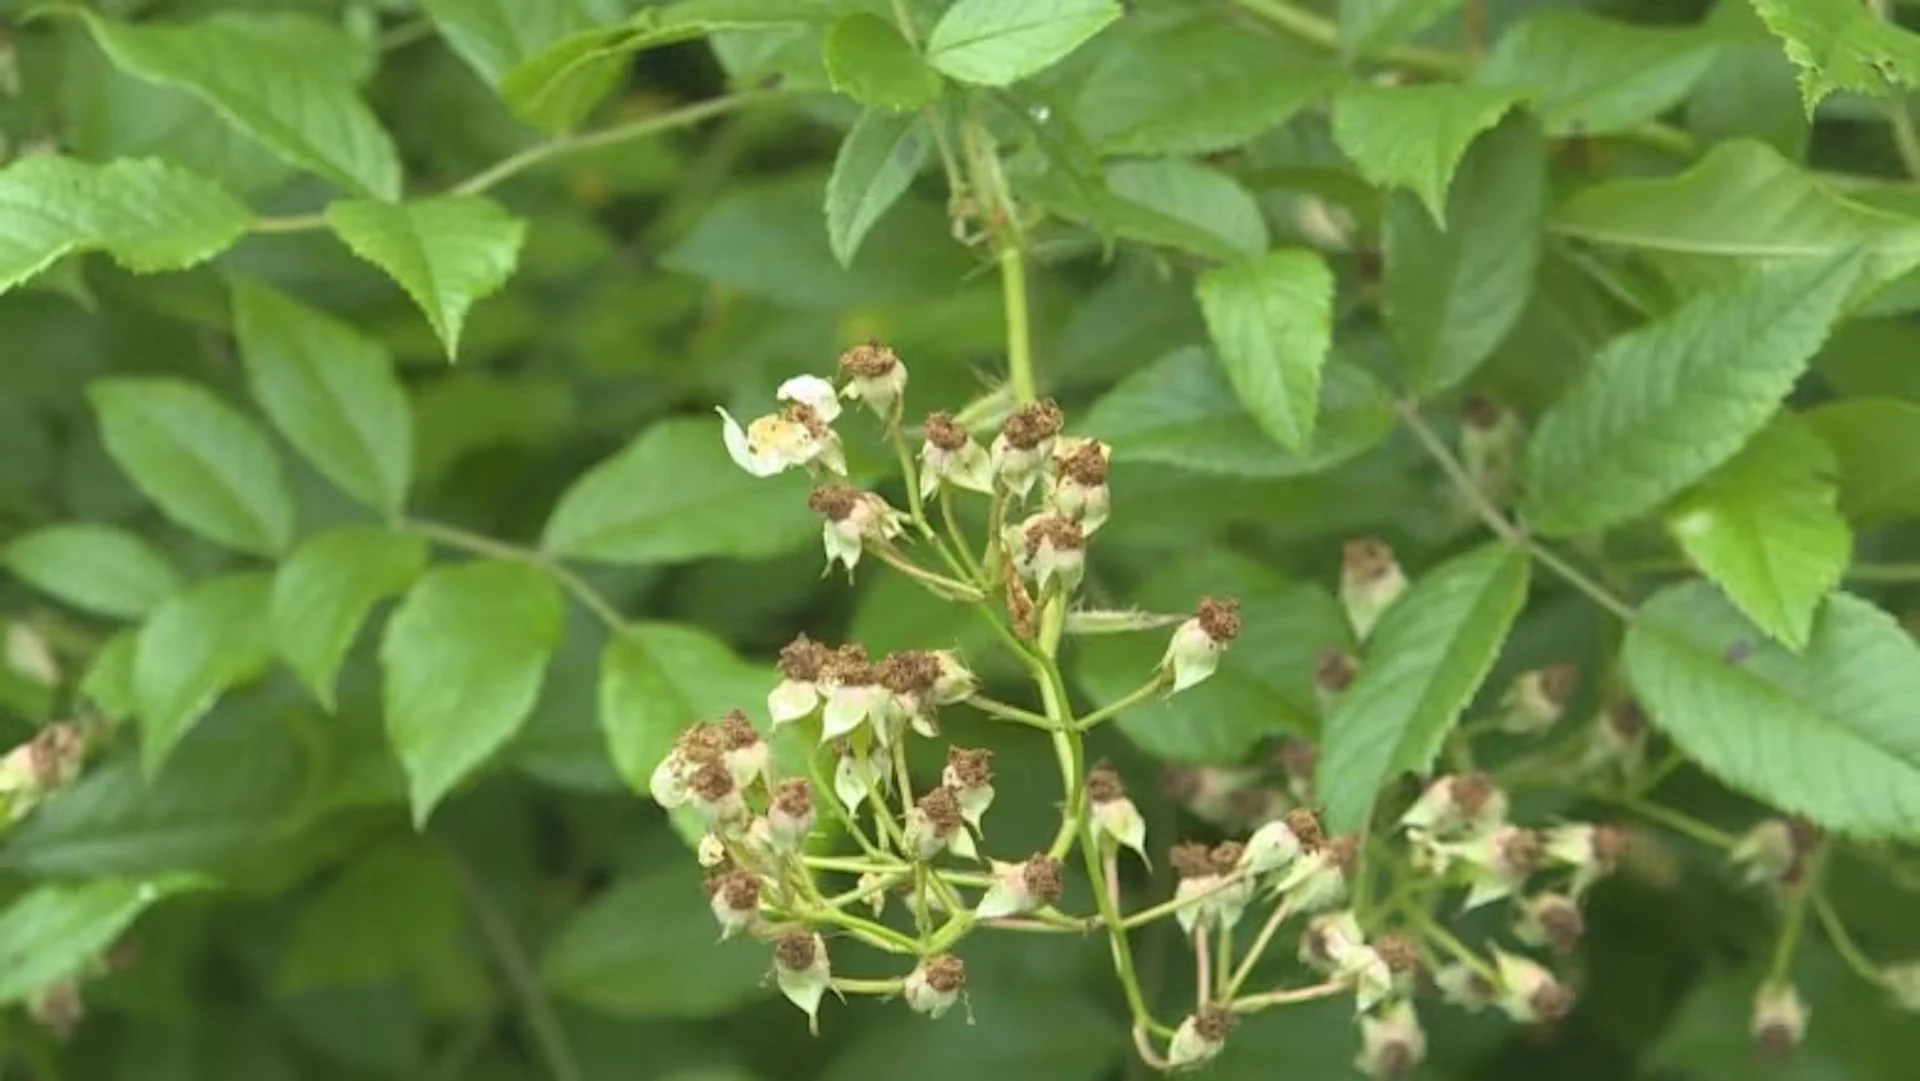 New Brunswick invasive species council raises alarm over harmful rose